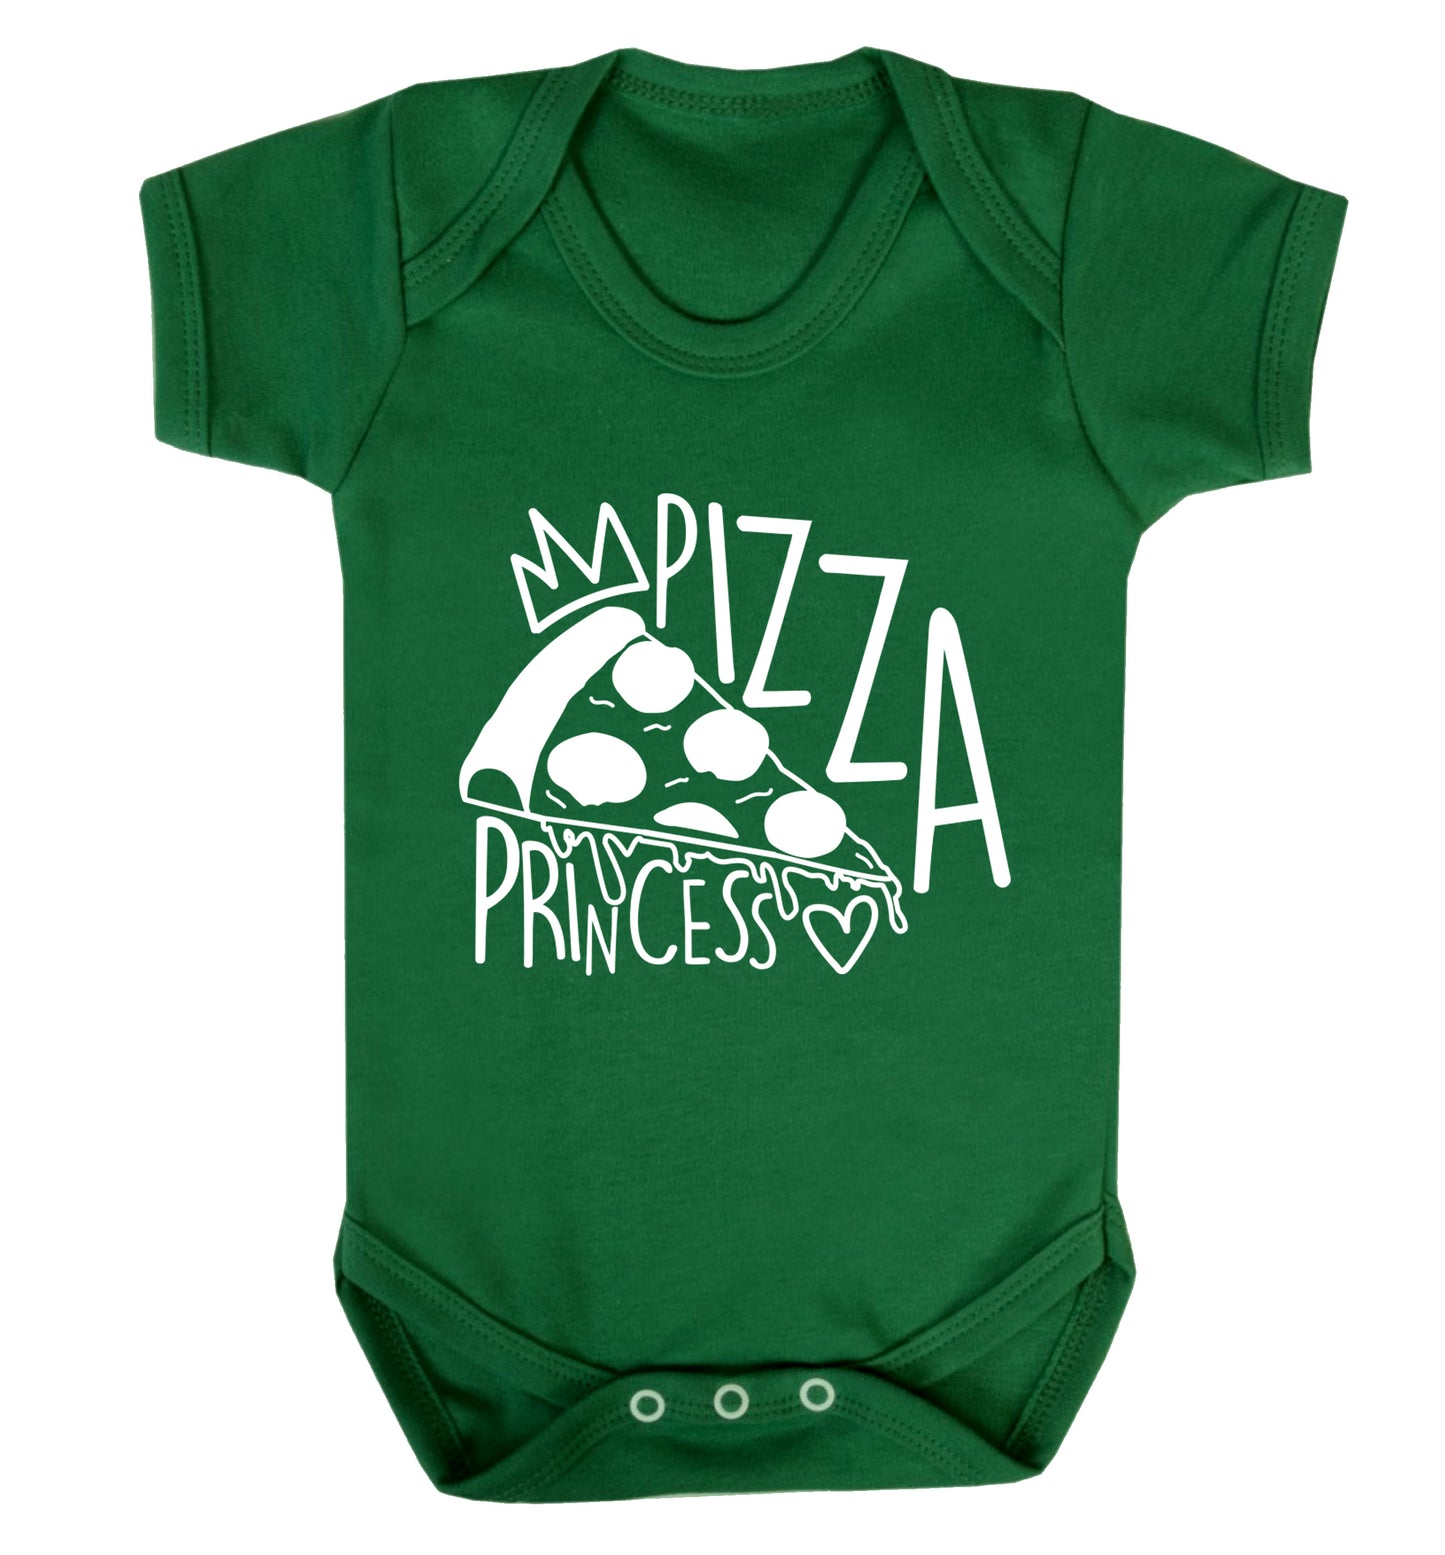 Pizza Princess Baby Vest green 18-24 months